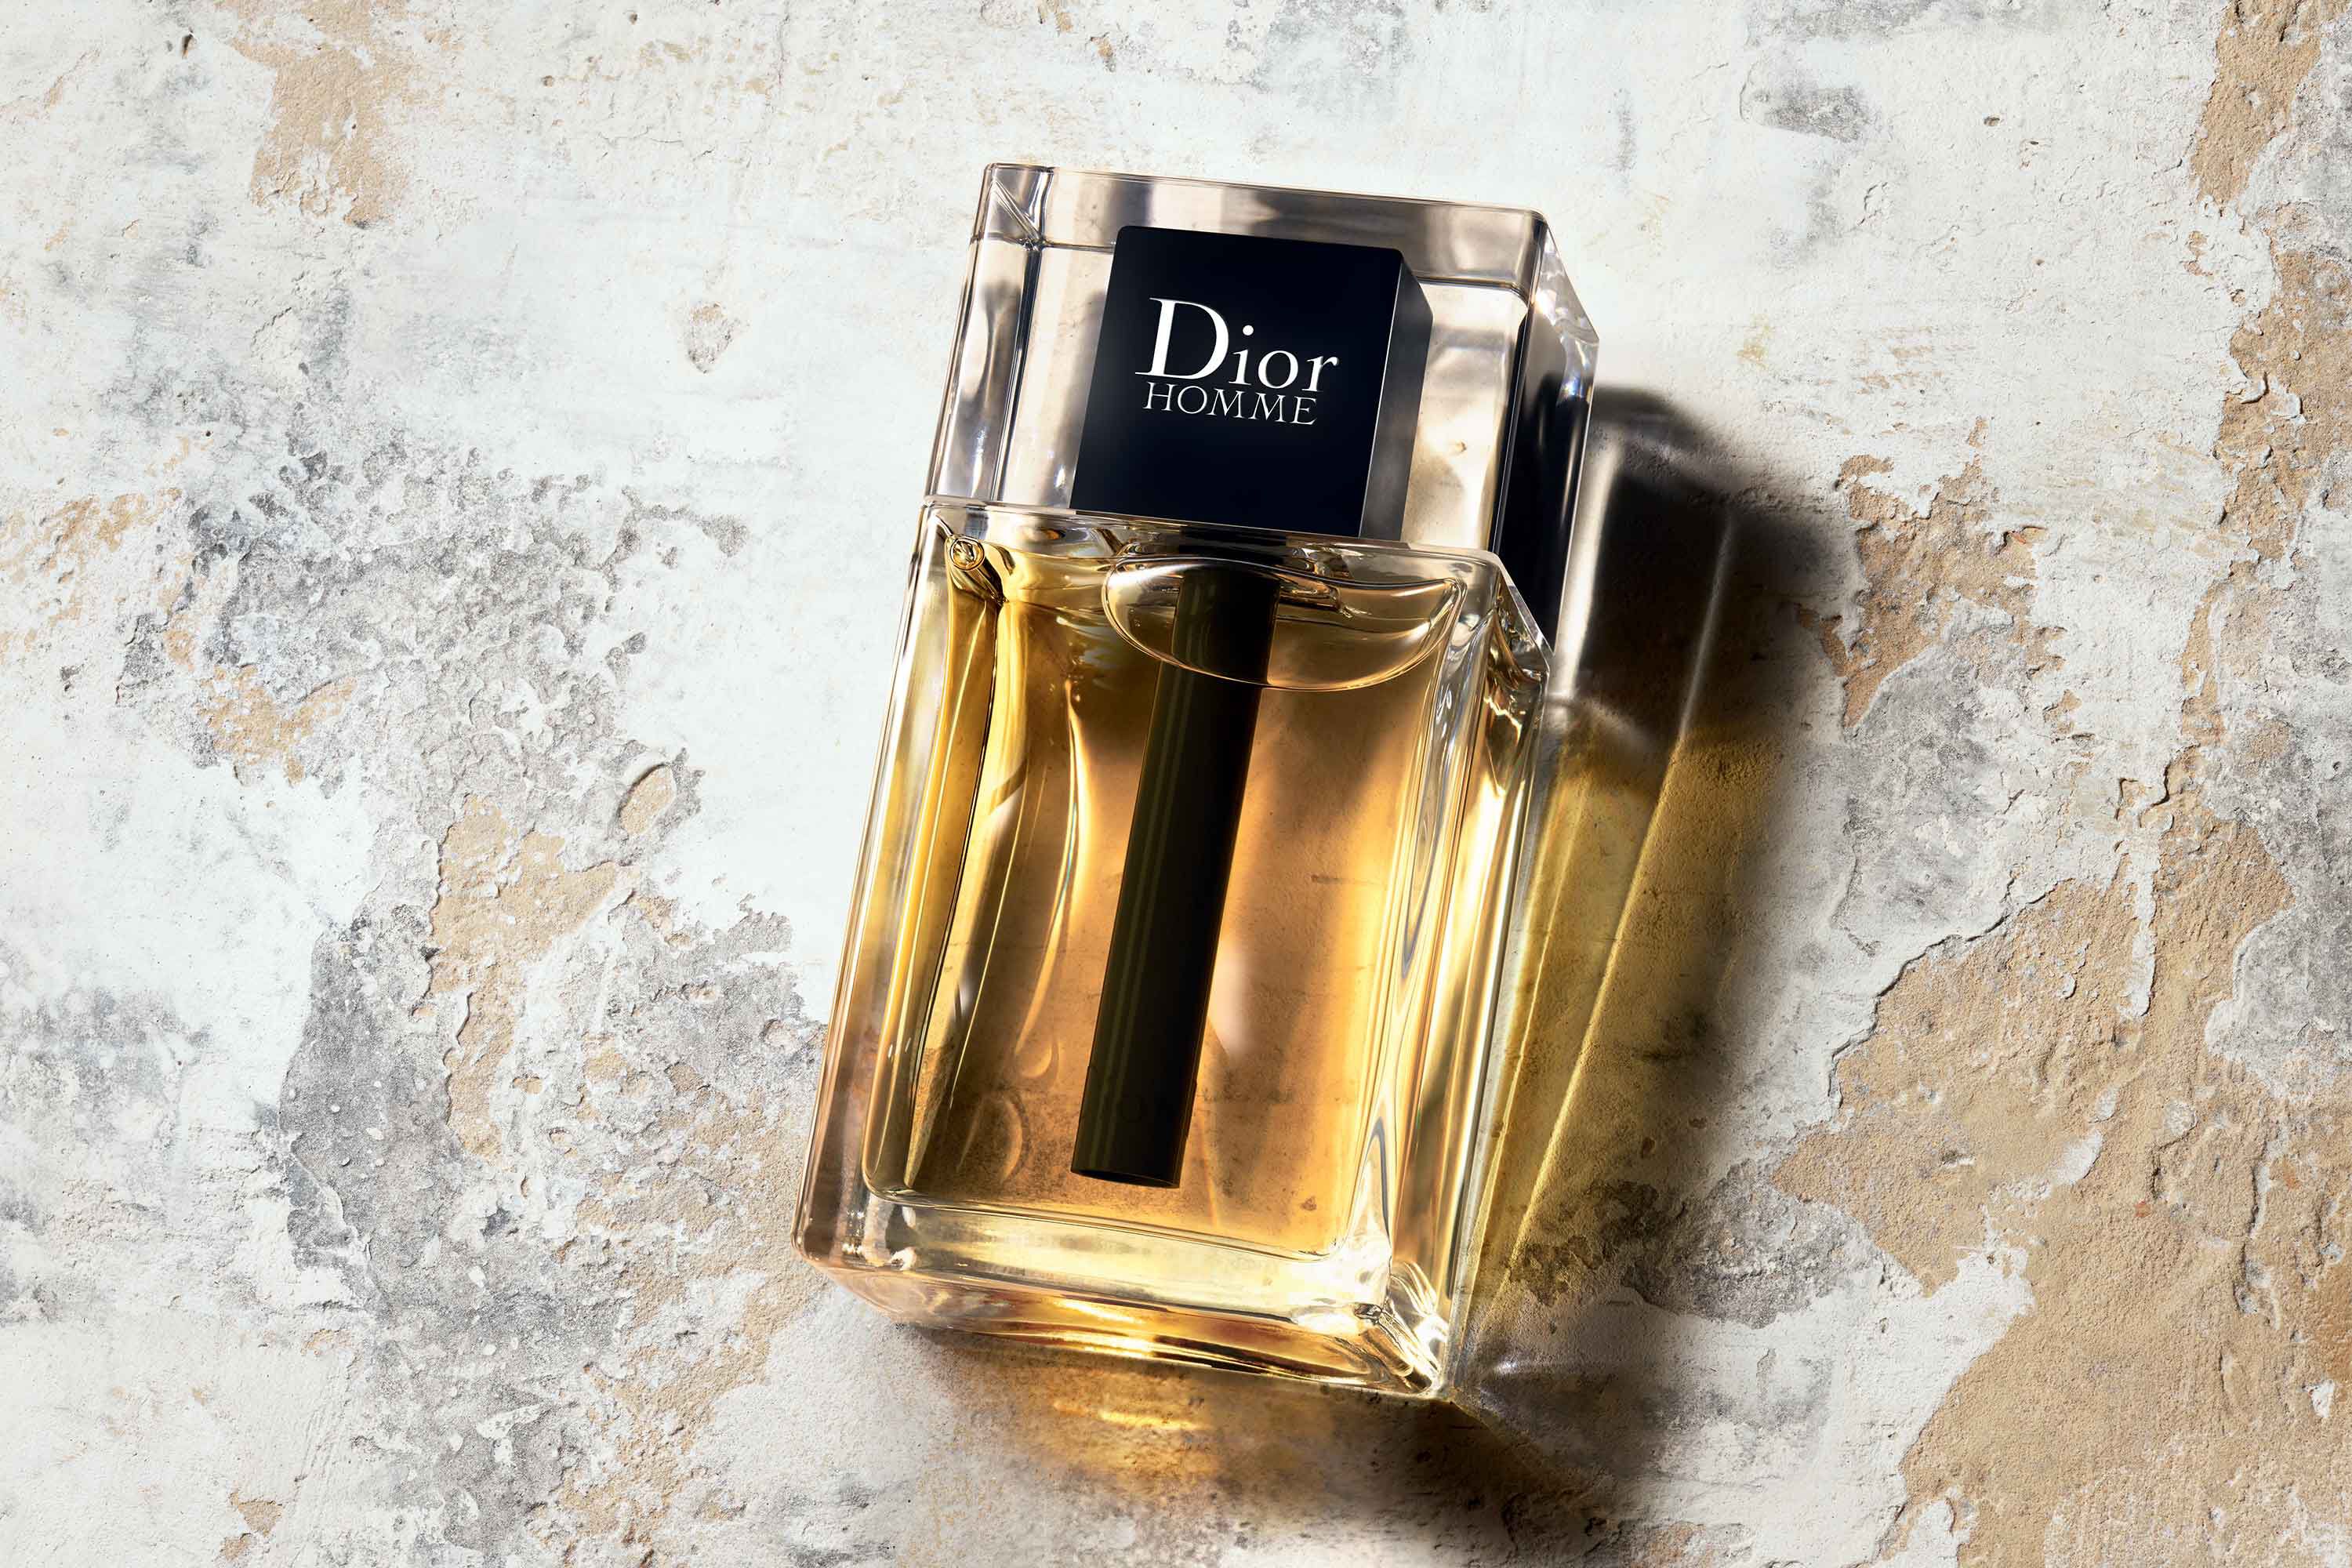 Dwang chrysant terrorisme Dior Homme, Eau de Toilette for Men Between Strength & Sensuality | DIOR